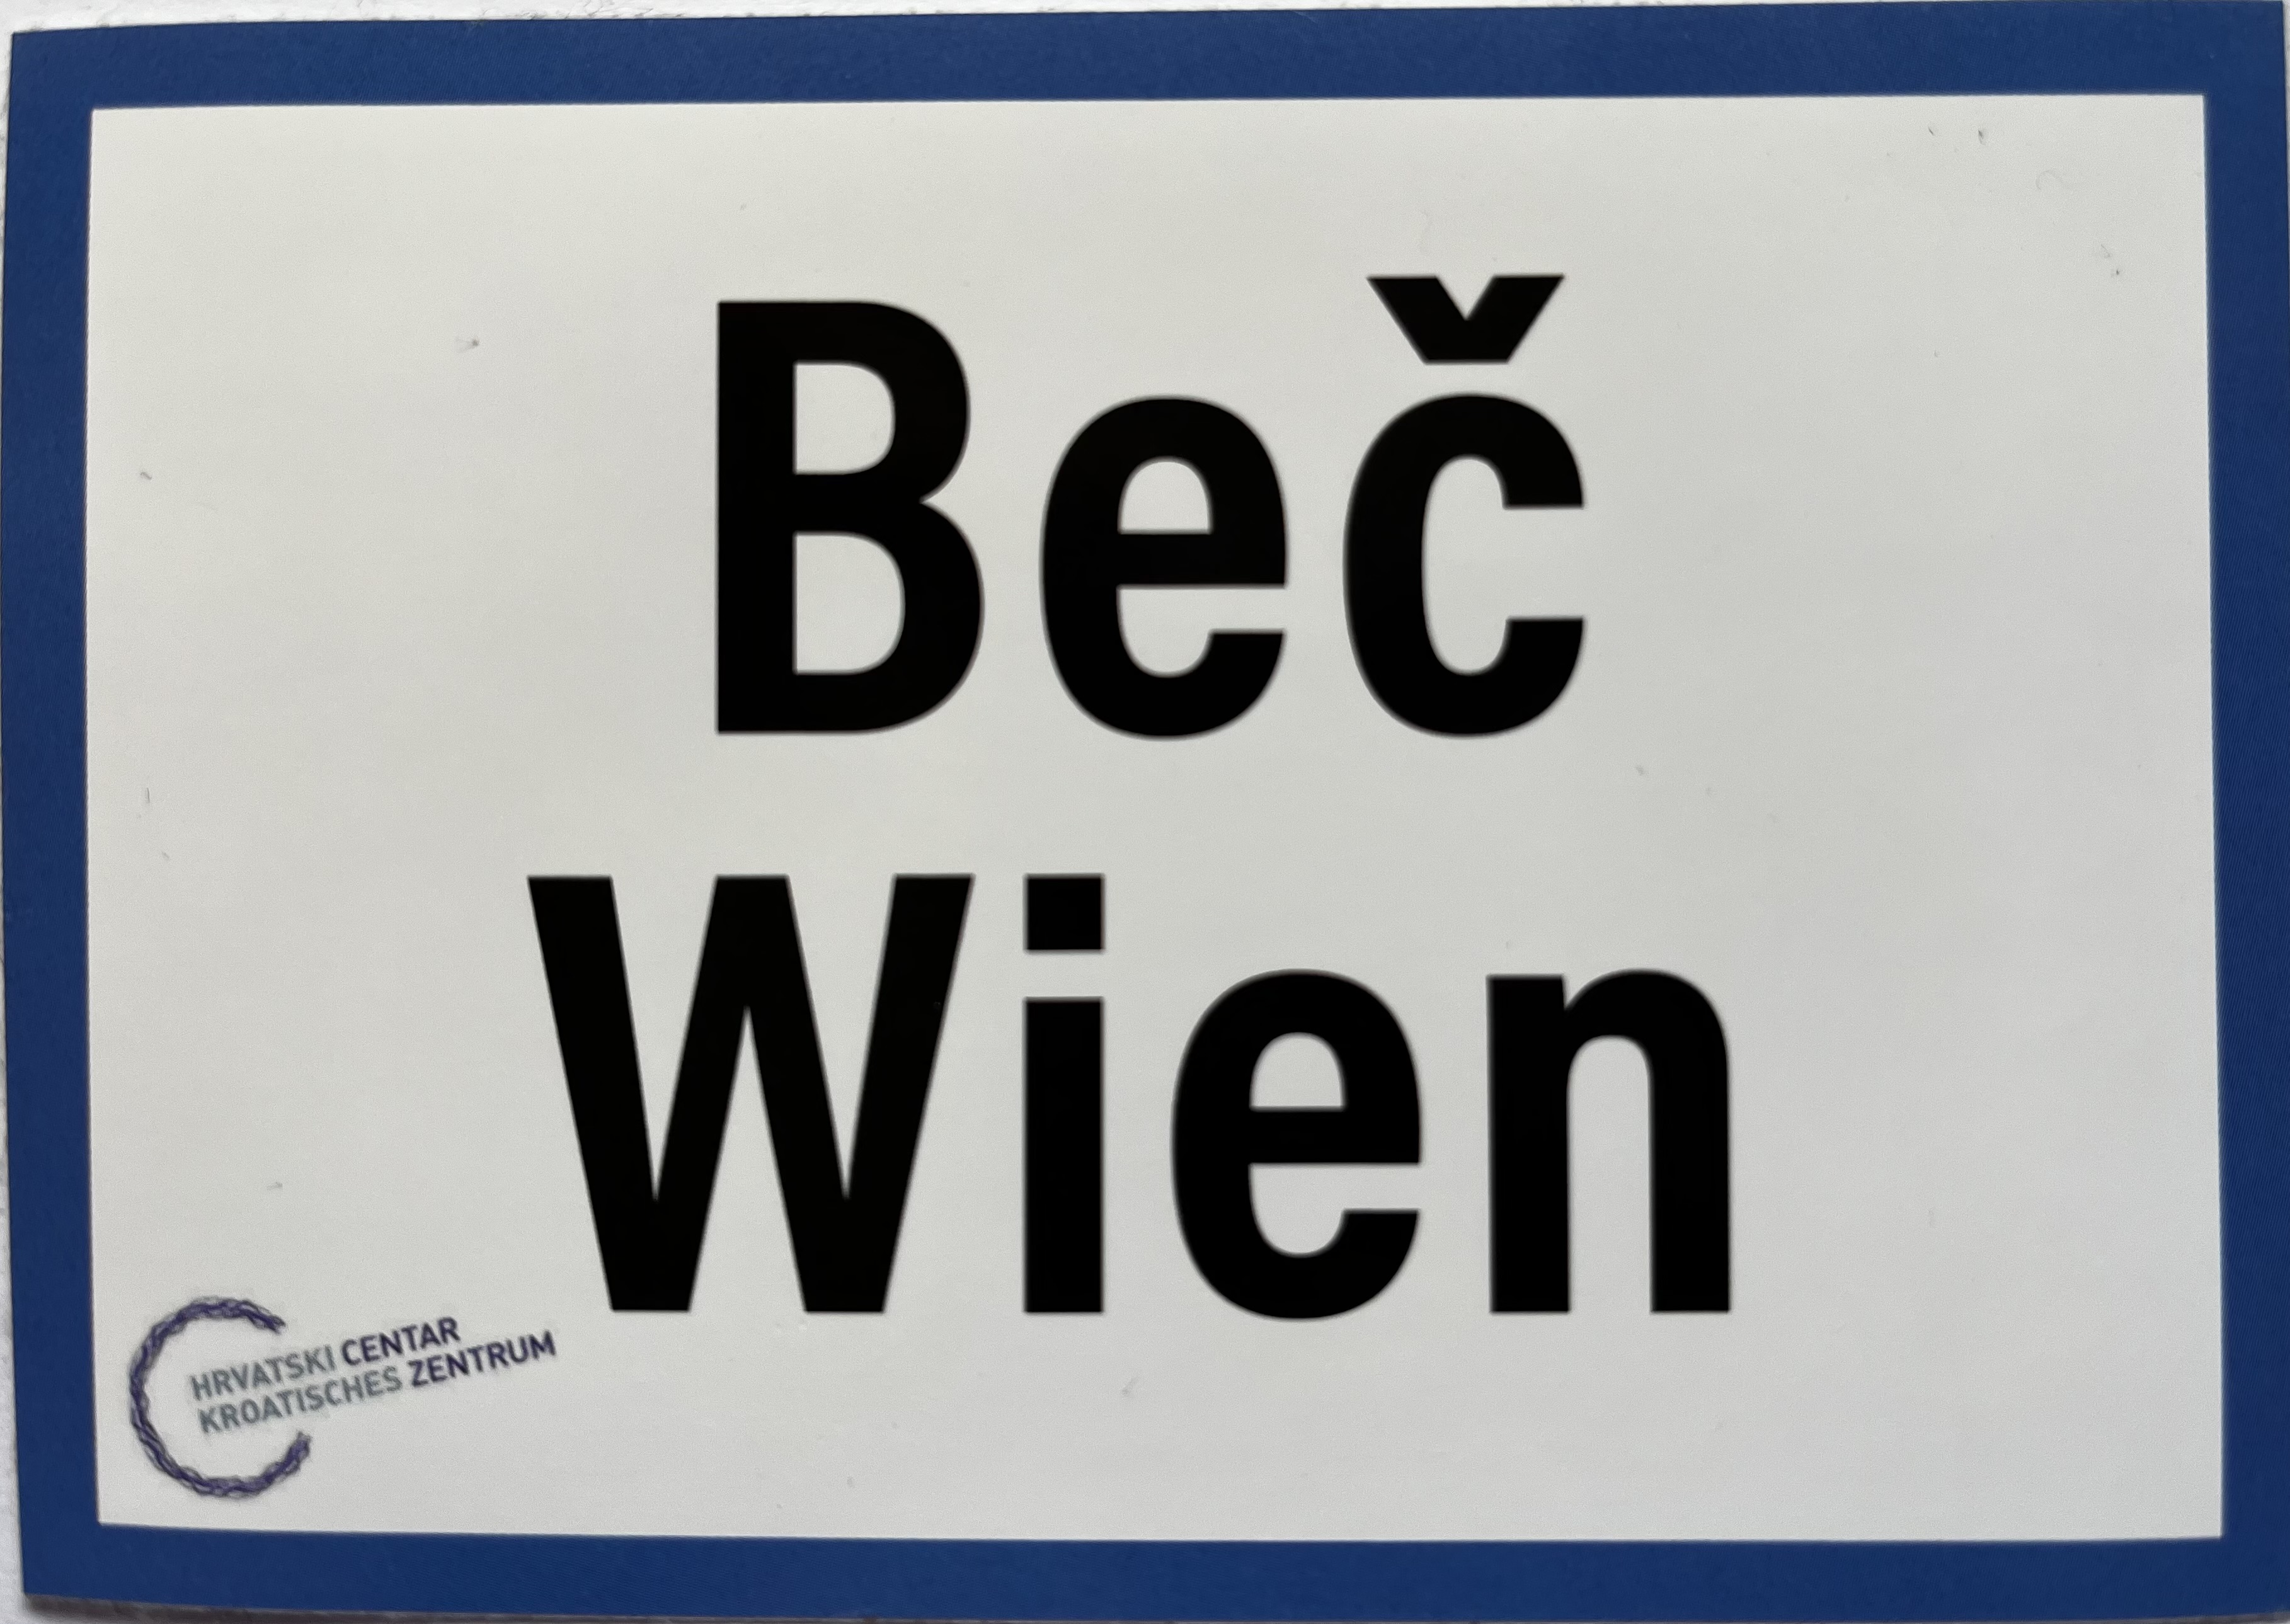 Initiative für bilinguale Erziehung und Bildung in Wien / Beč